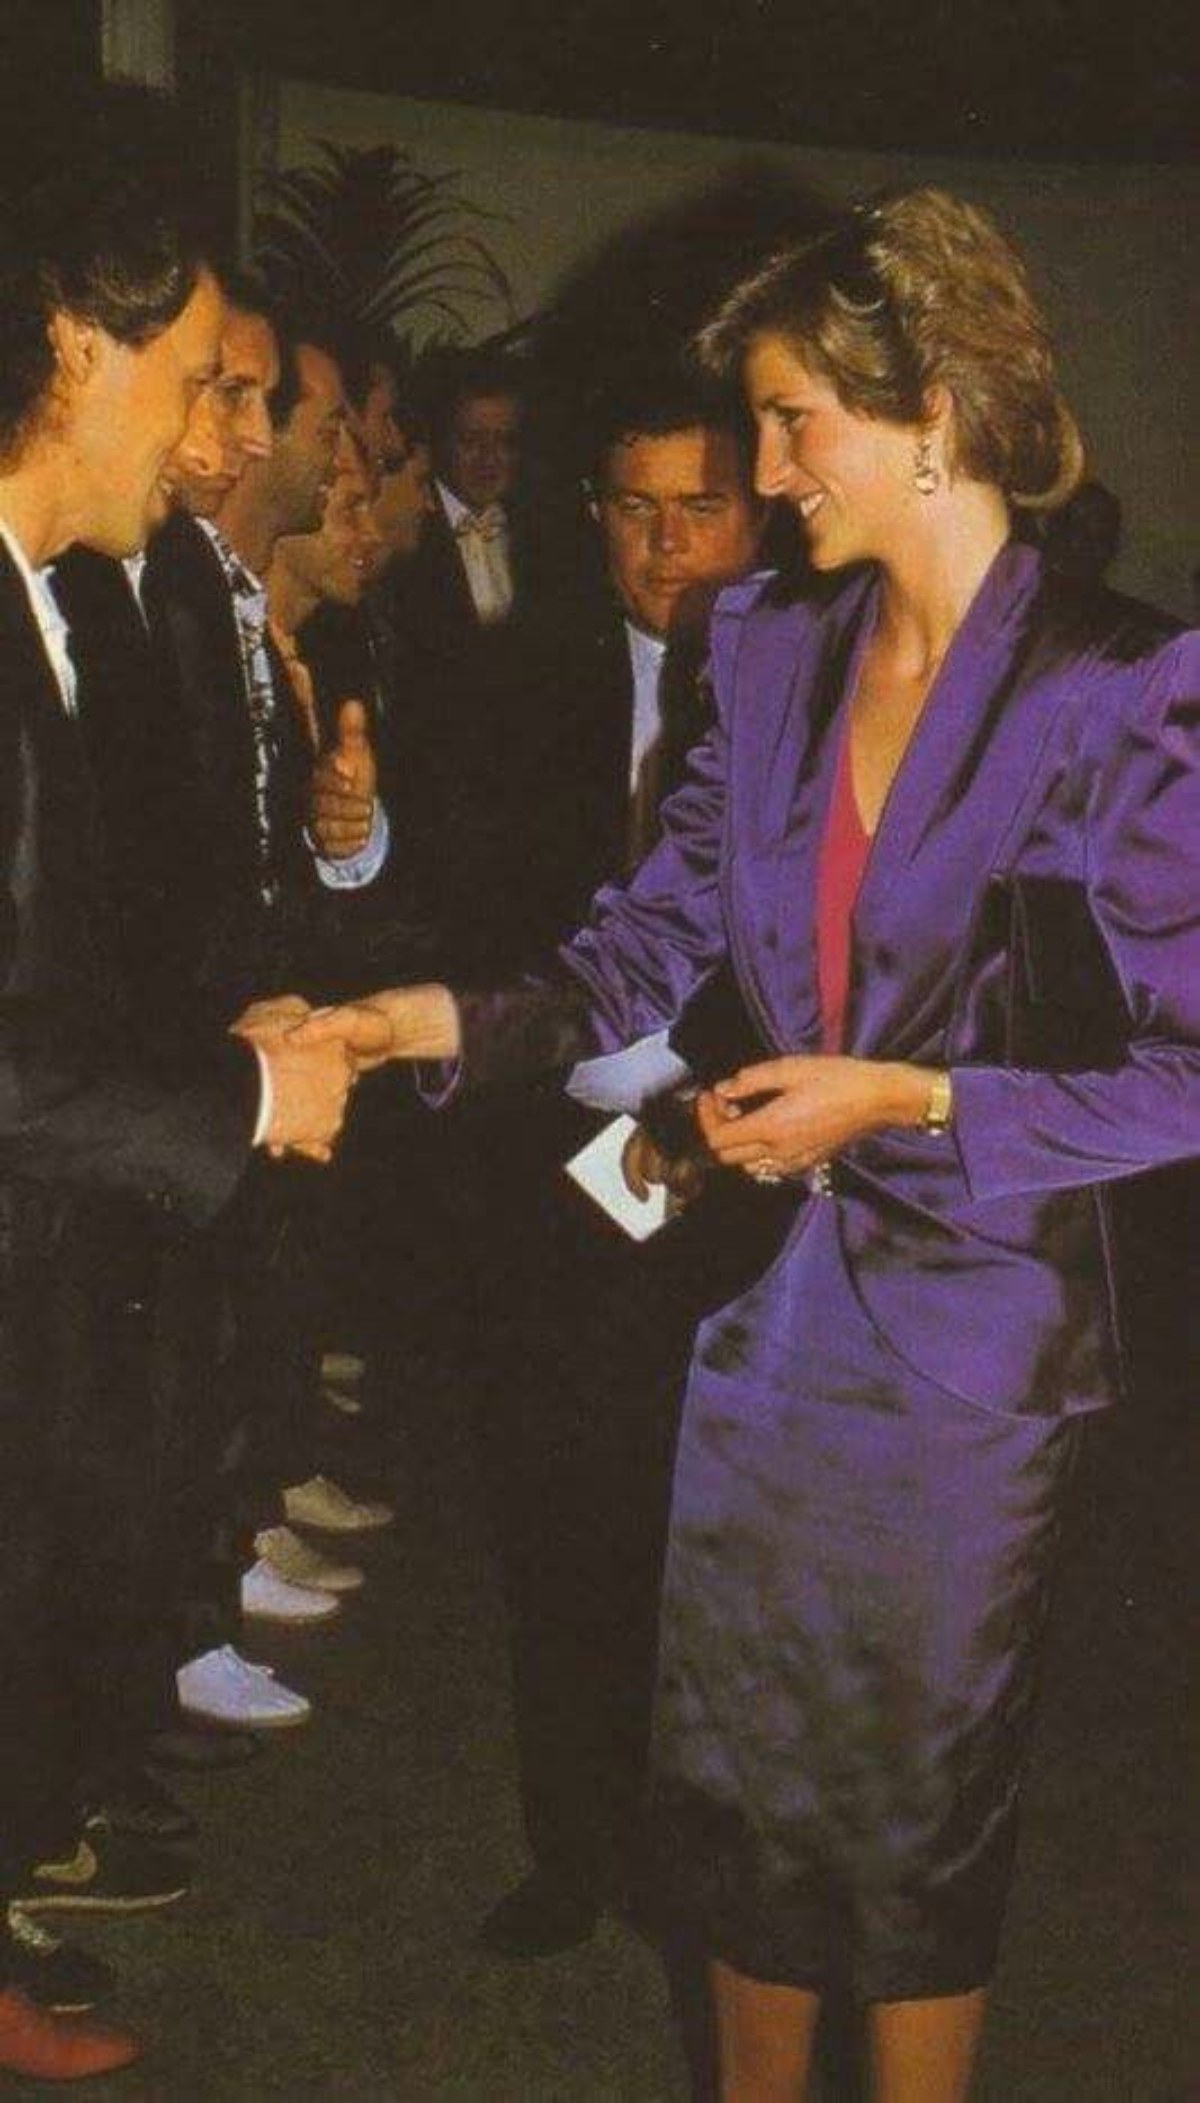 Princess Diana was a big fan of Dire Straits!